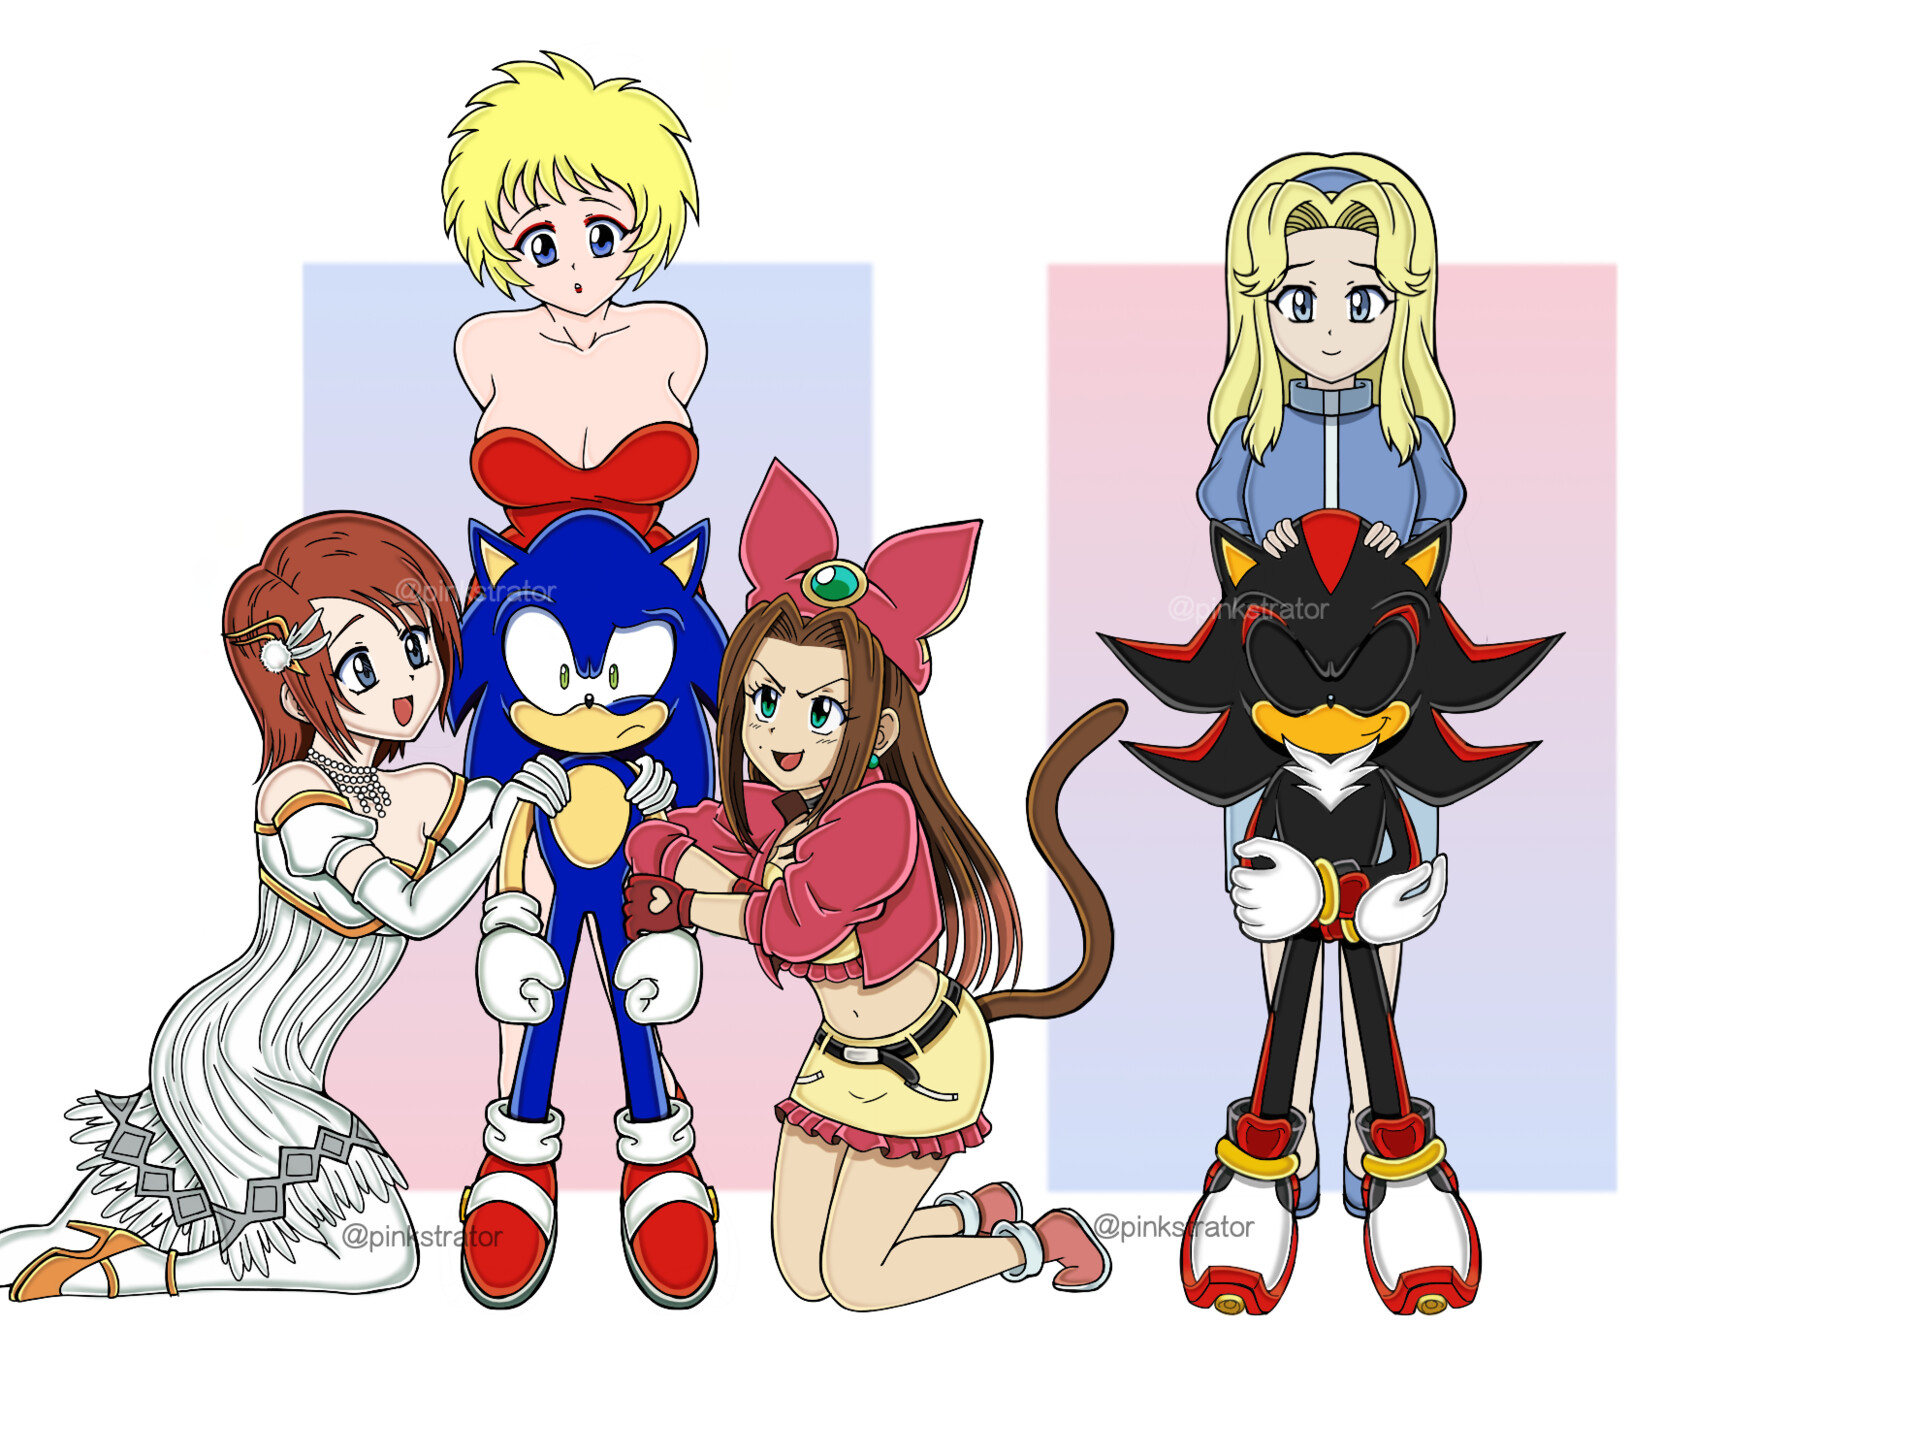 Sonic X Shadow